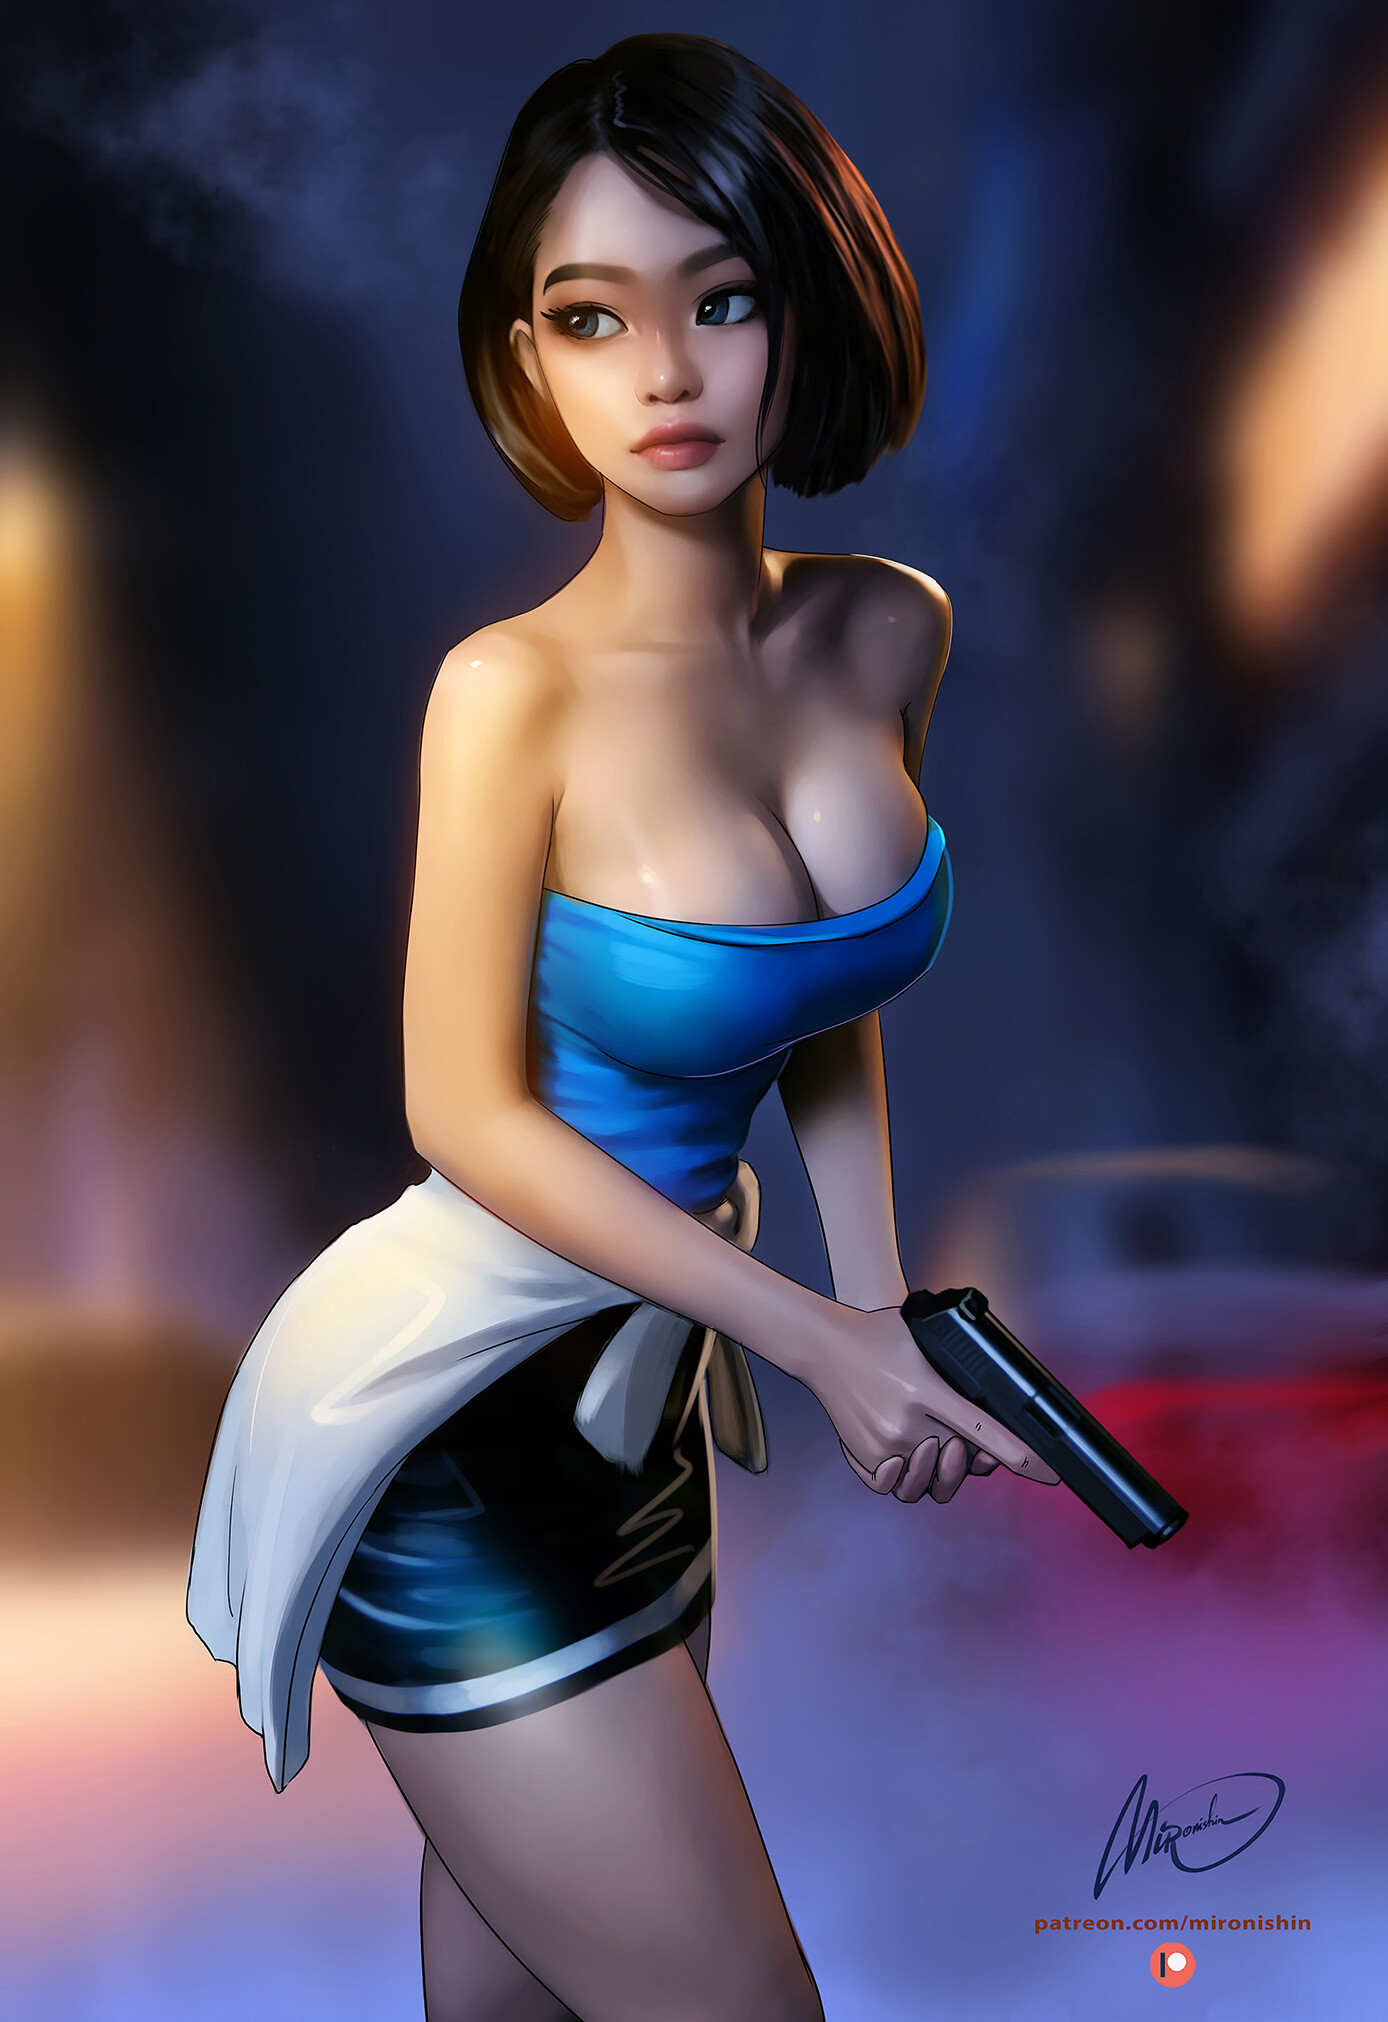 Mironishin Story Drawing Jill Valentine Resident Evil Dark Hair Pistol Blue Clothing Looking Away De 1388x2022